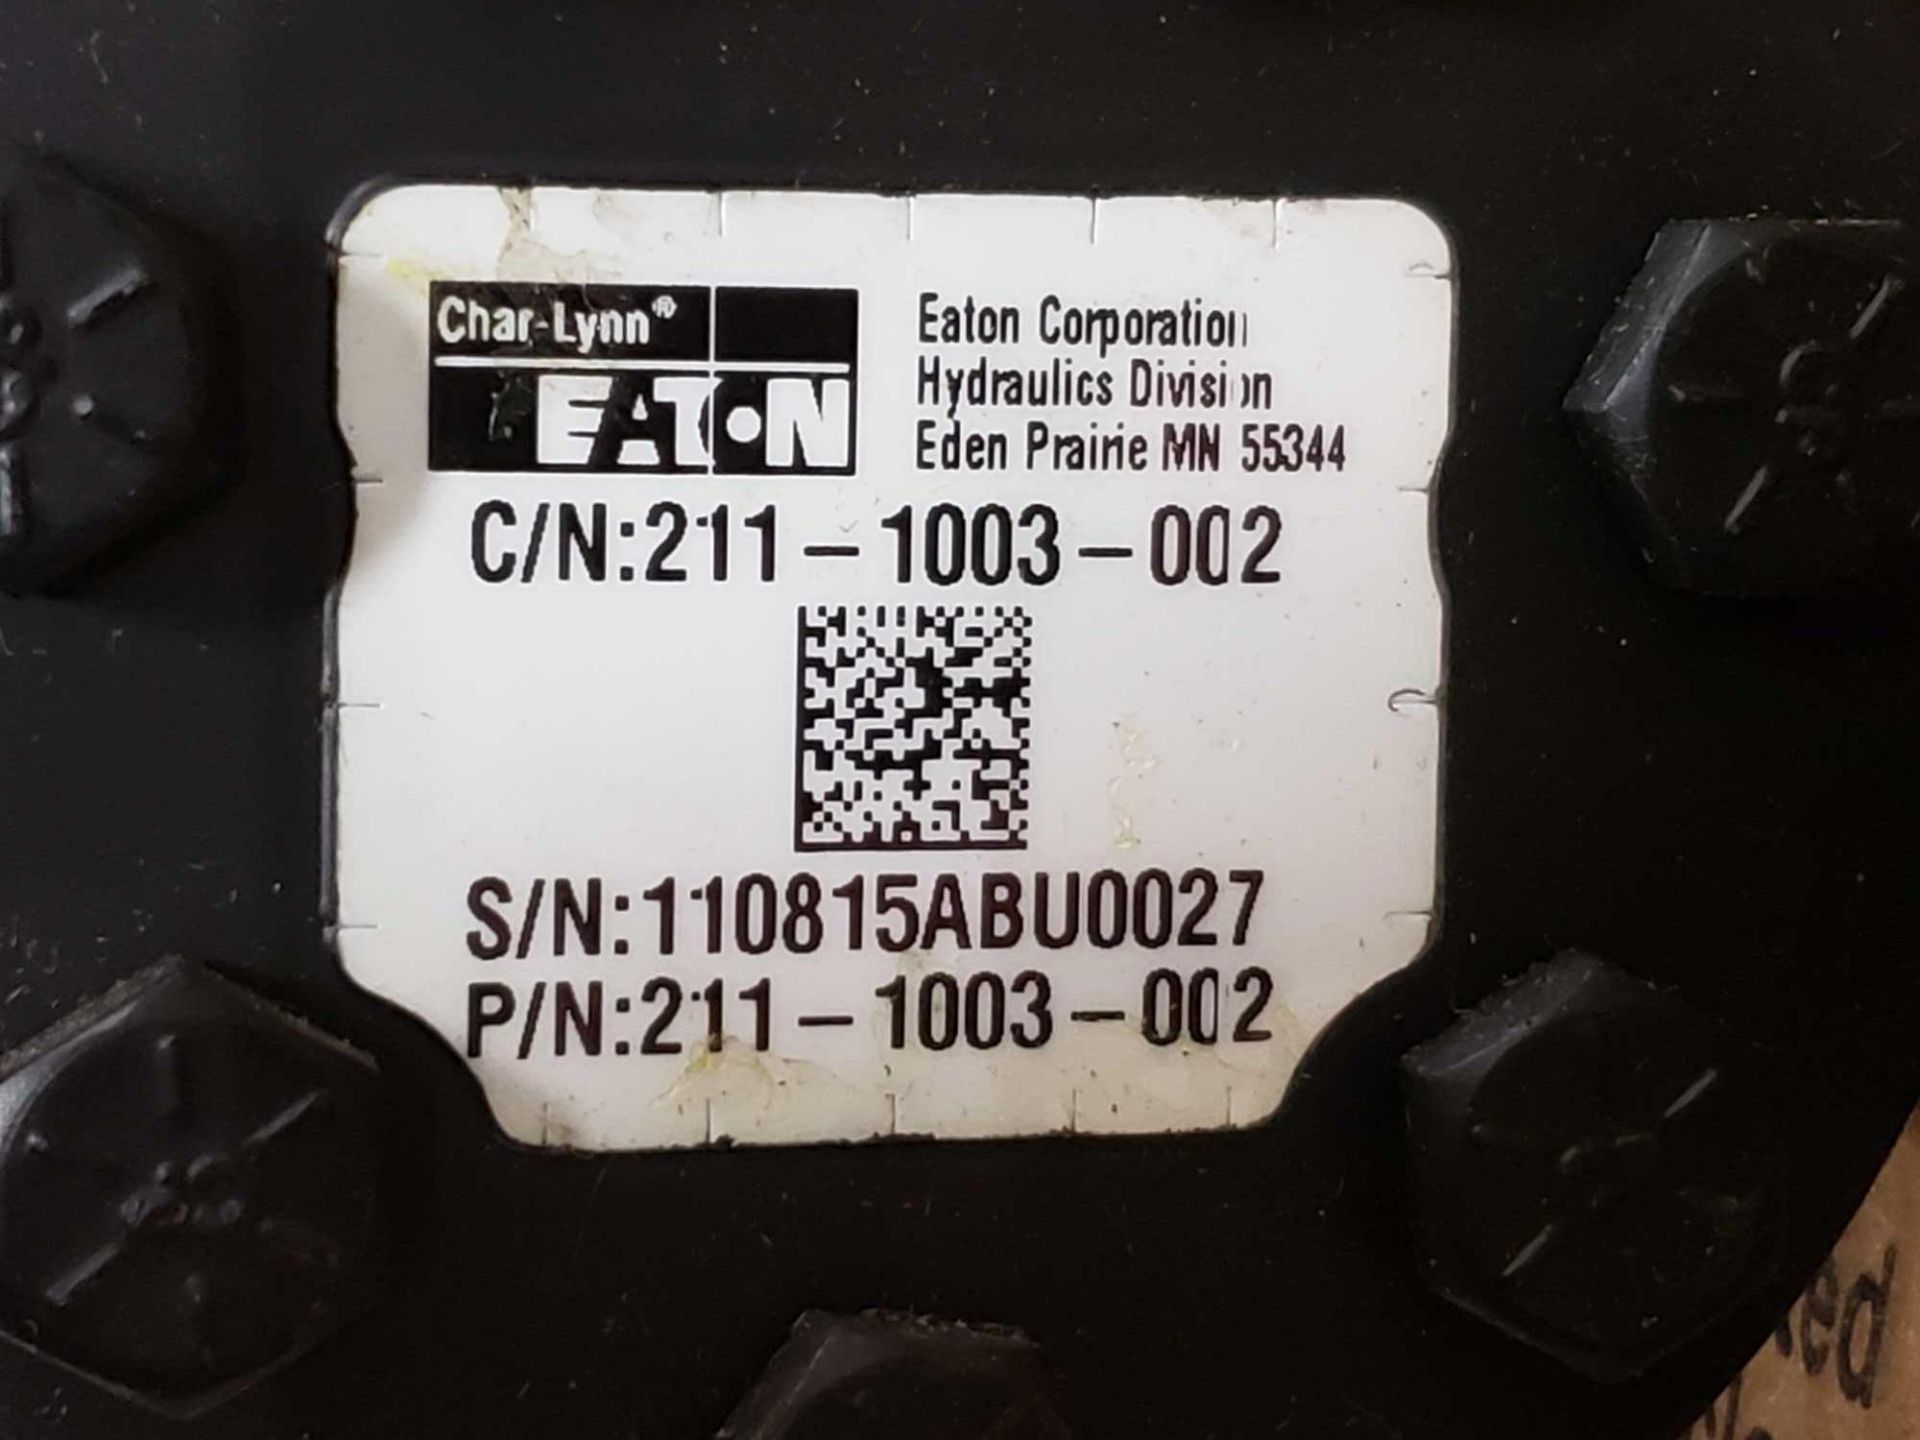 Char-Lynn Eaton hydraulic valve model 211-1003-002. New in box. - Image 4 of 4